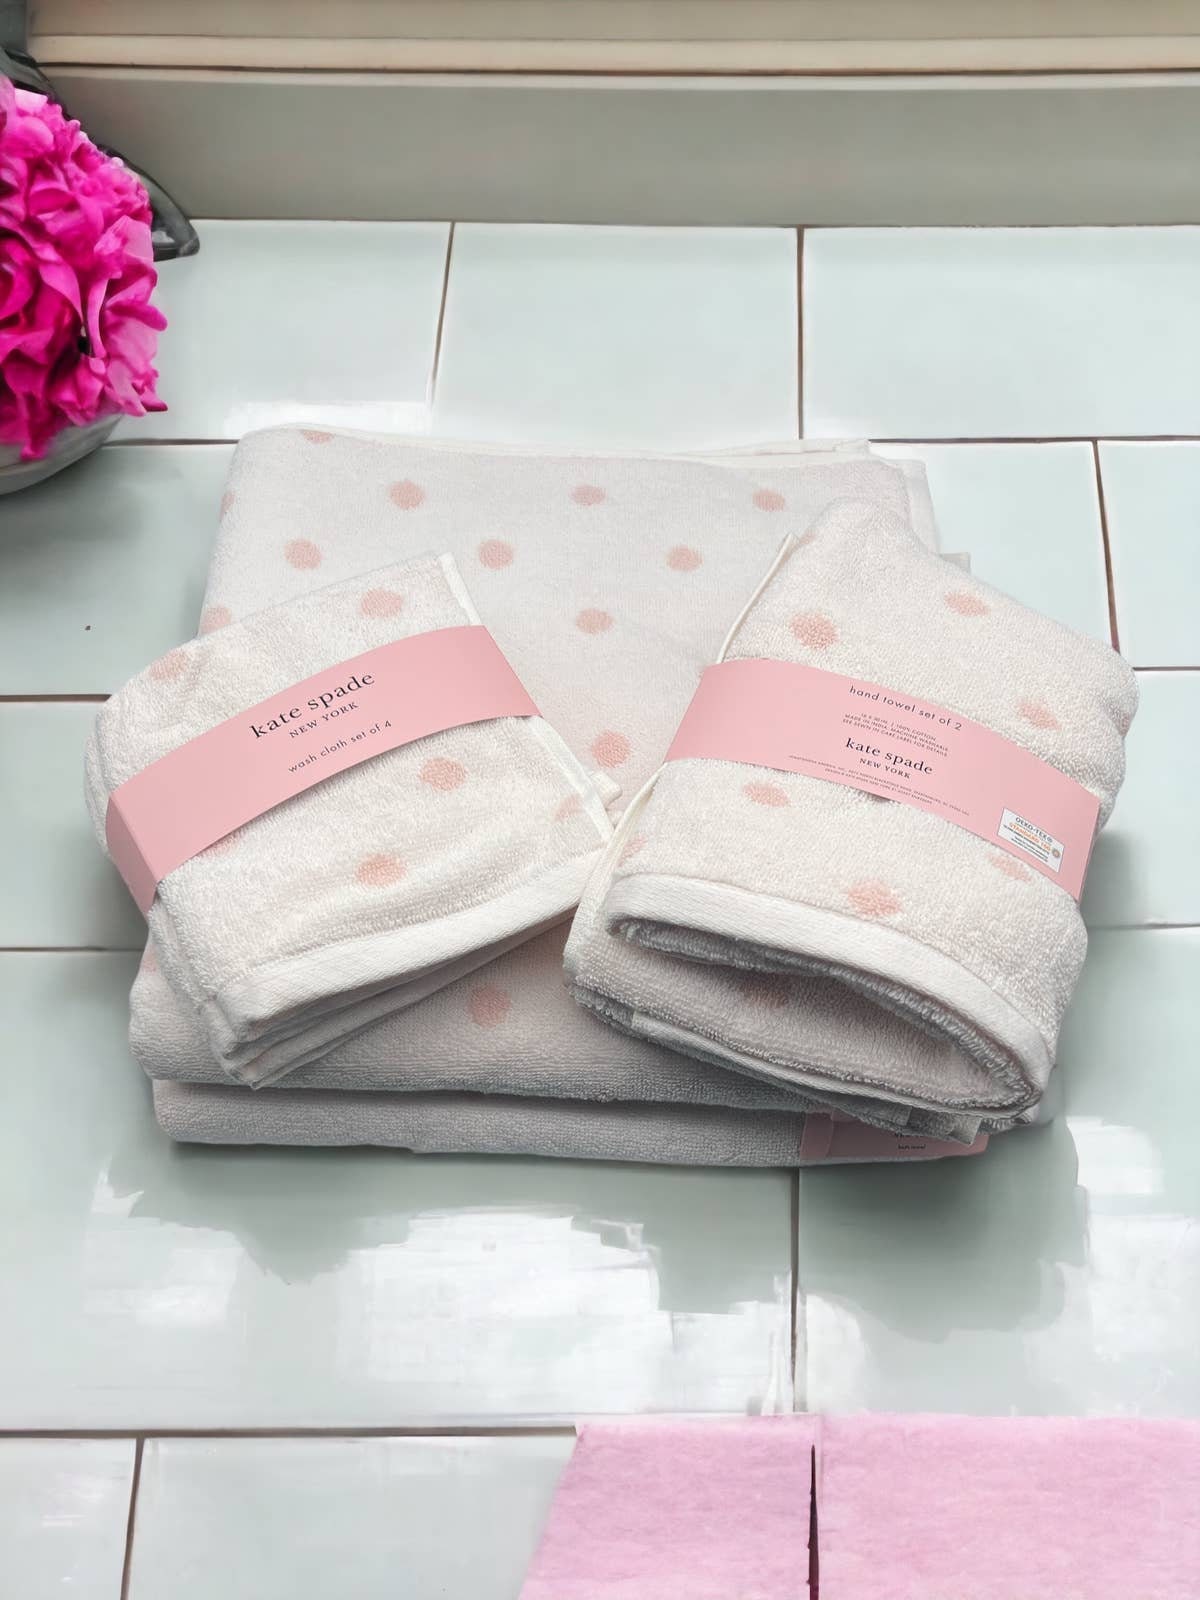 Kate Spade White Bath Towels Set of 4 